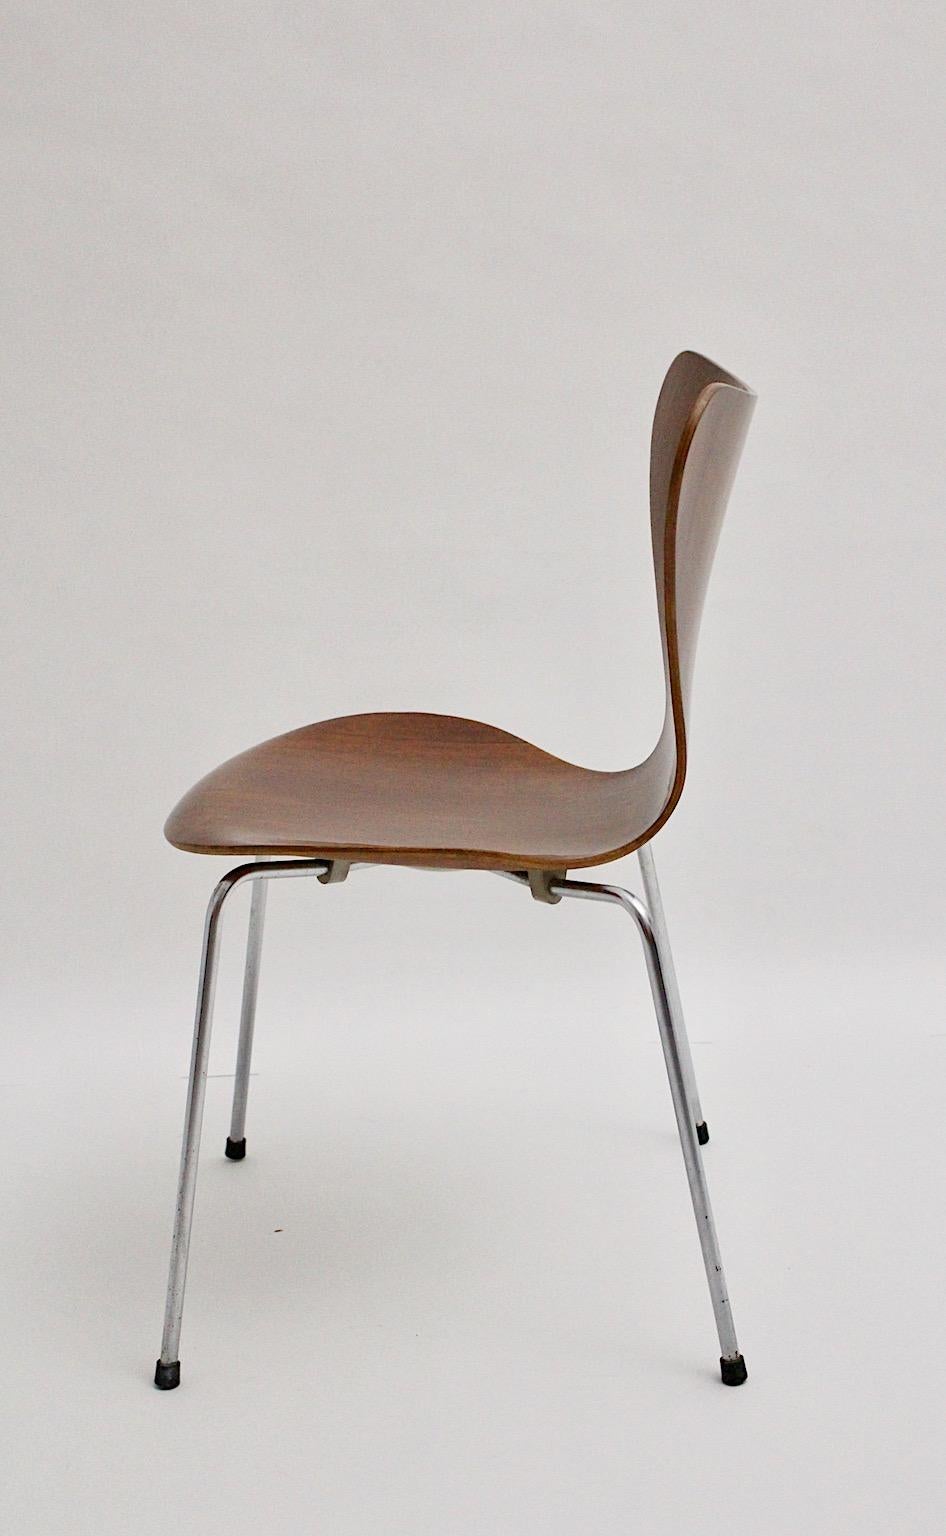 Modernist Vintage Brown Four Dining Chairs Arne Jacobsen 3107 circa 1955 Denmark For Sale 8